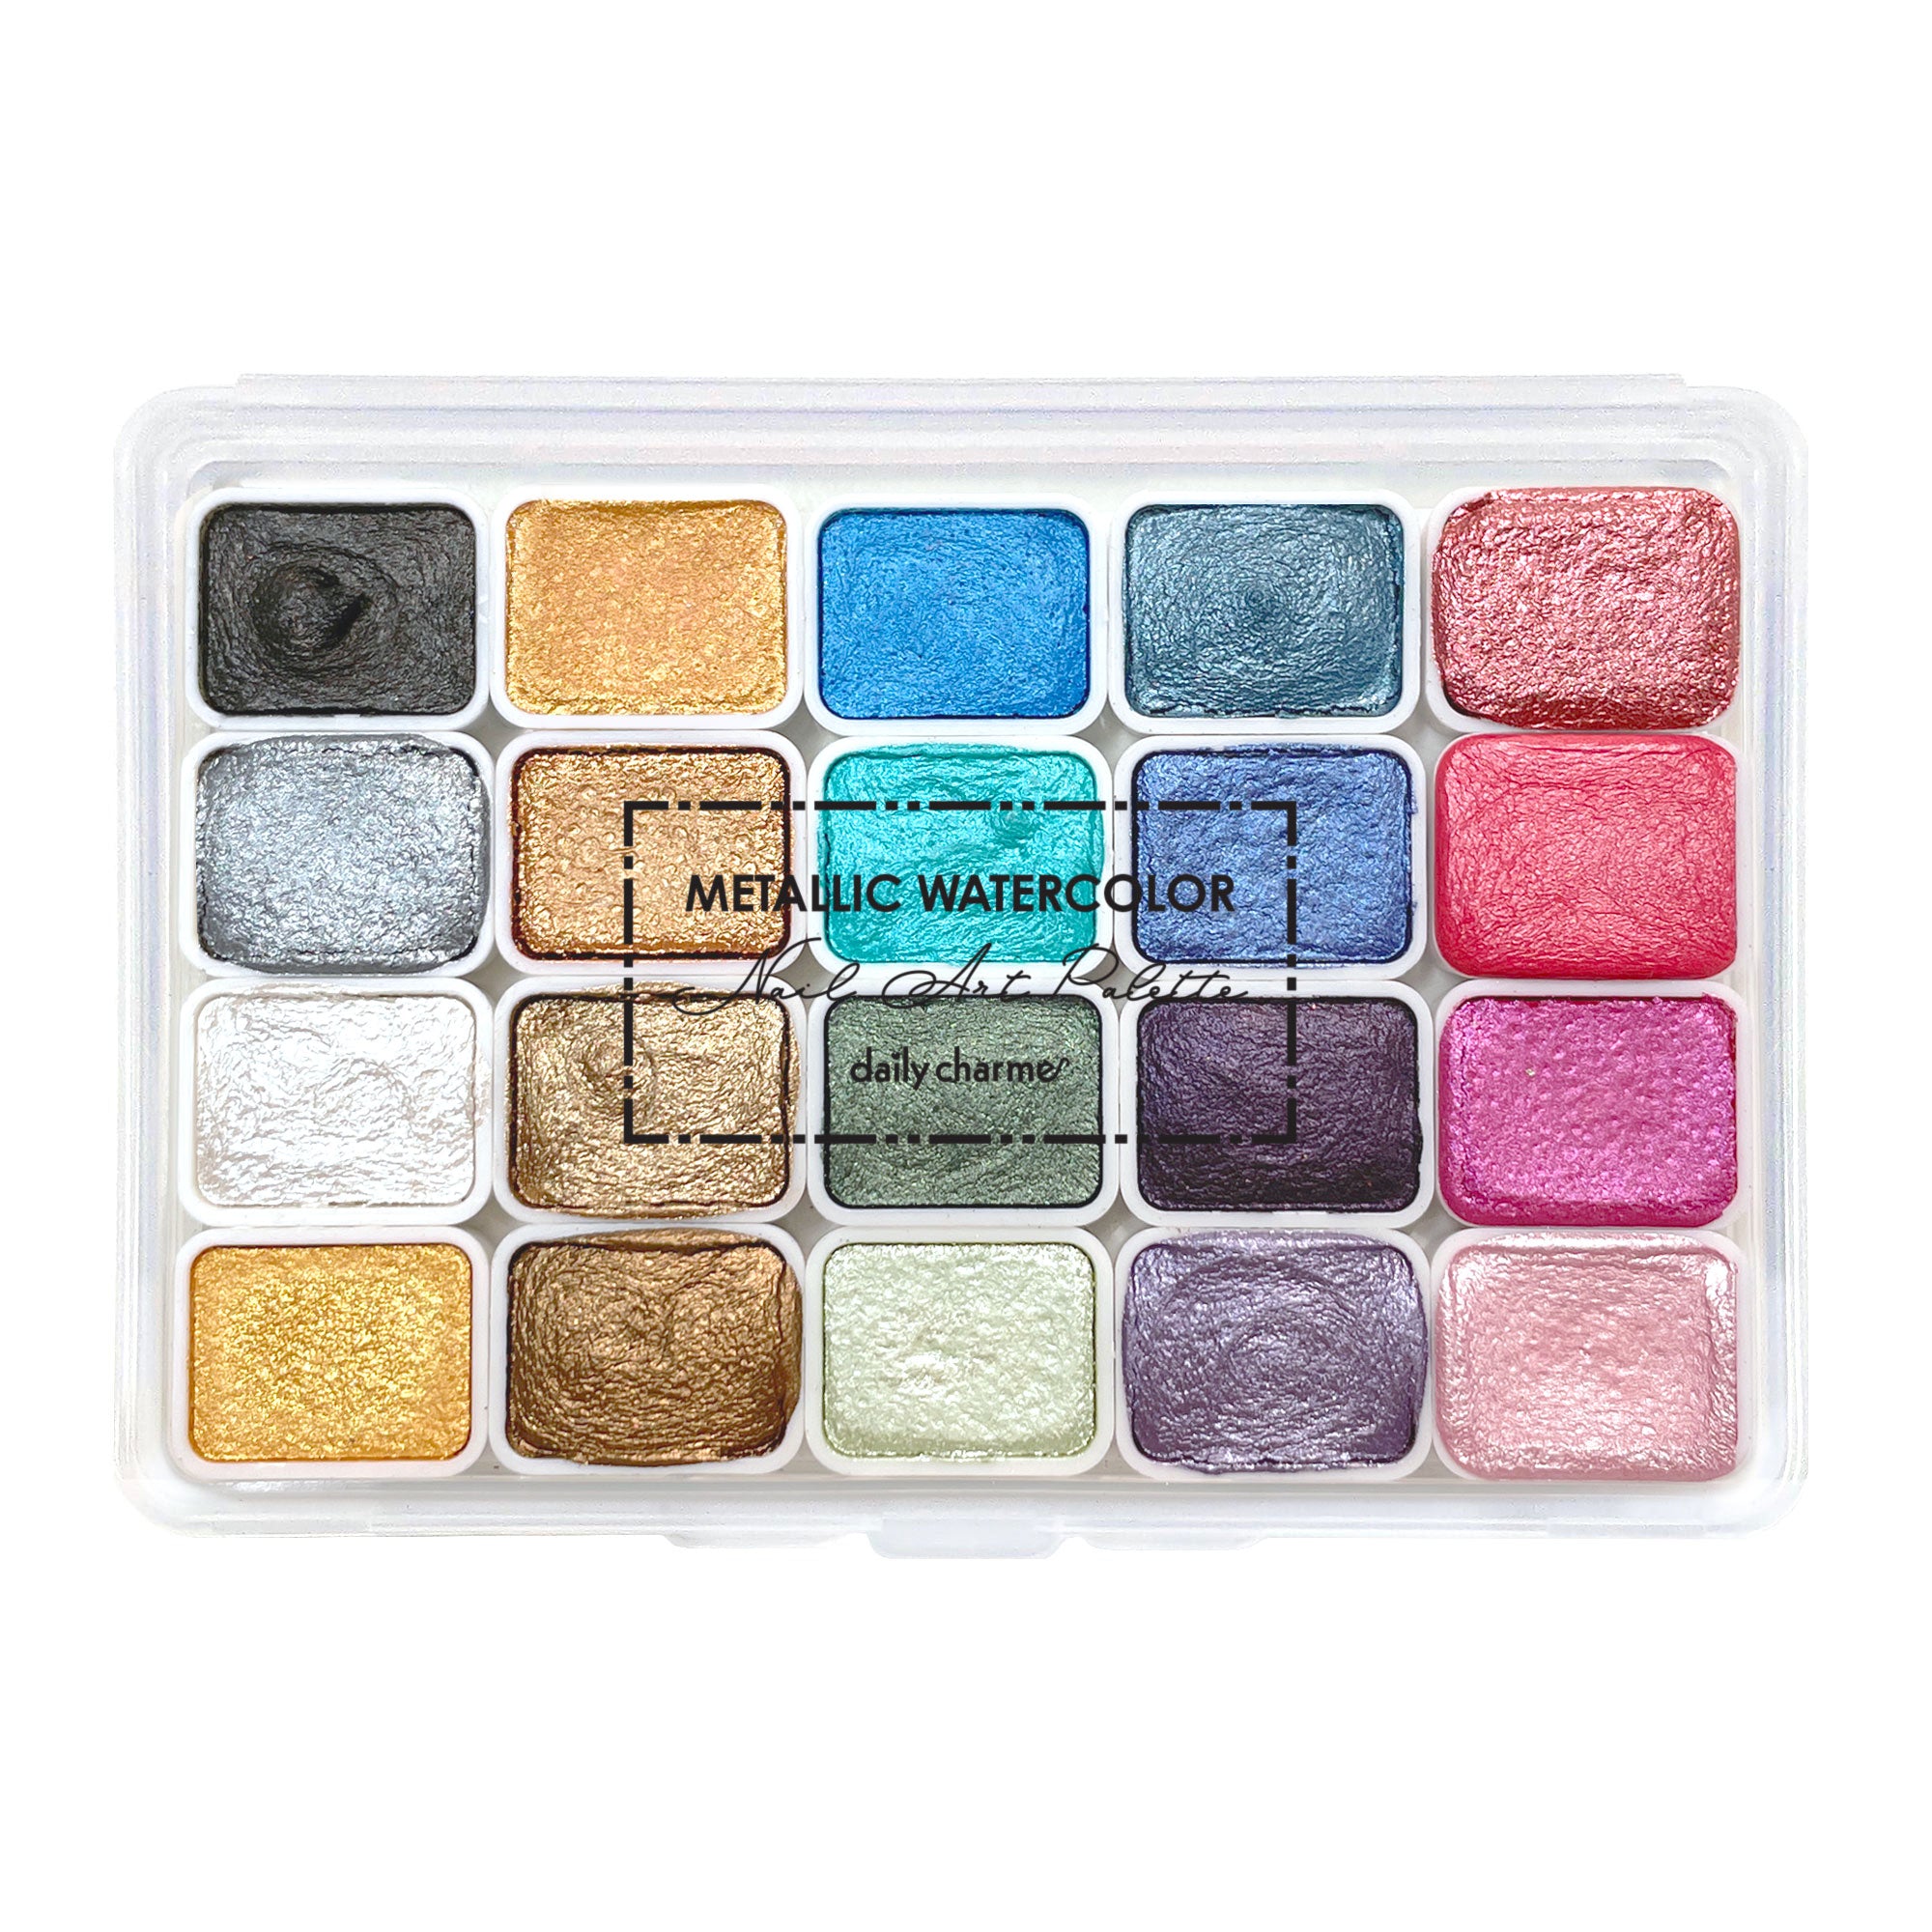 CHARMING MAY Nail Watercolor Paint Set,4 Boxes 48 Colors Shimmer Solid  Watercolor for Nails,Metallic Nail Color Powder,Metallic Powder for Nails